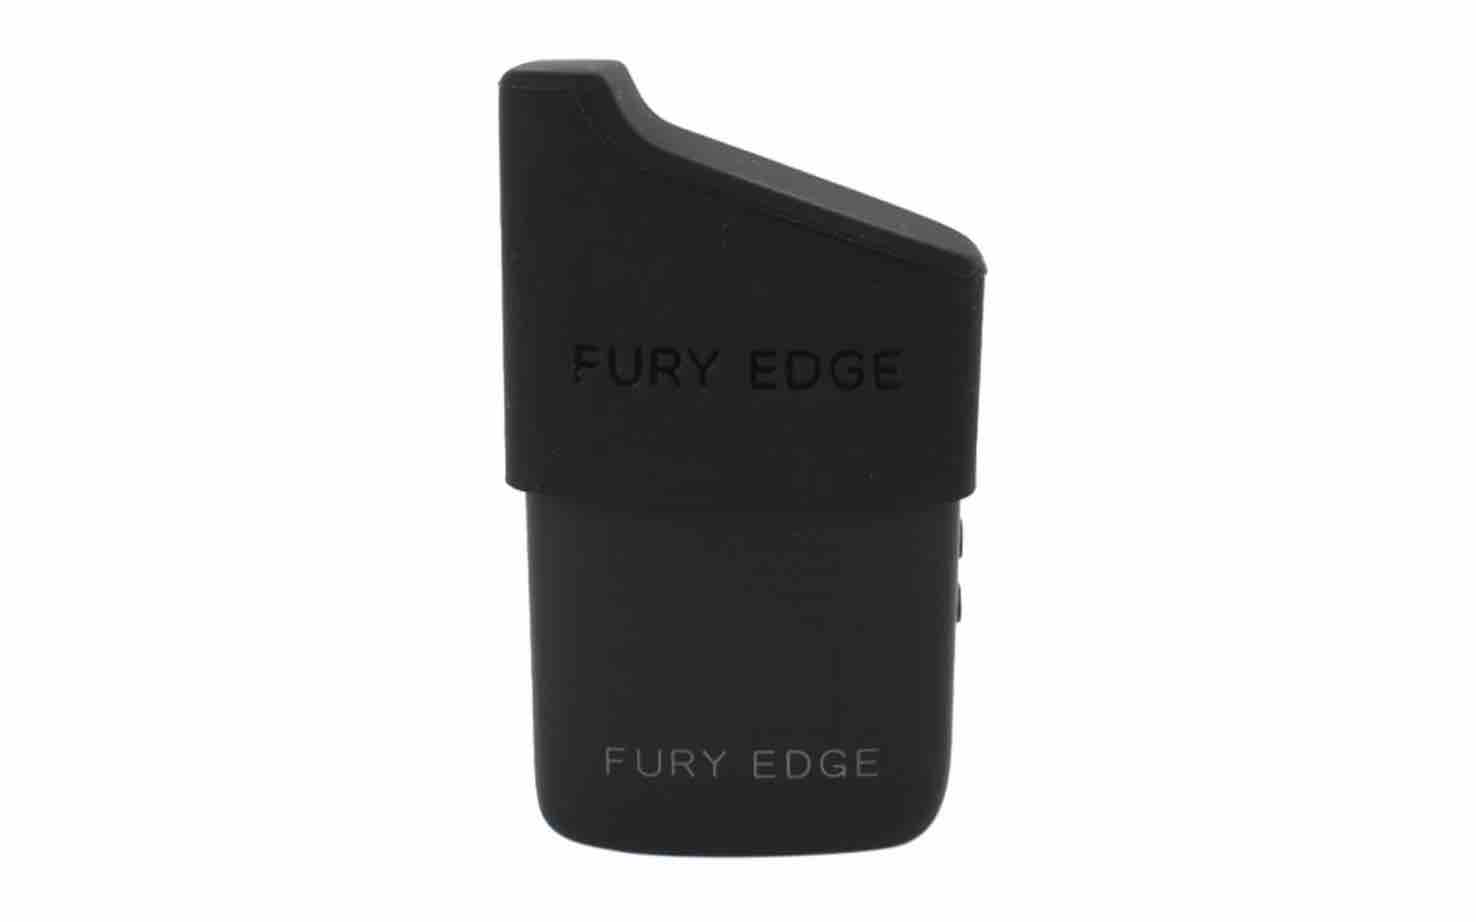 Fury Edge How To Use